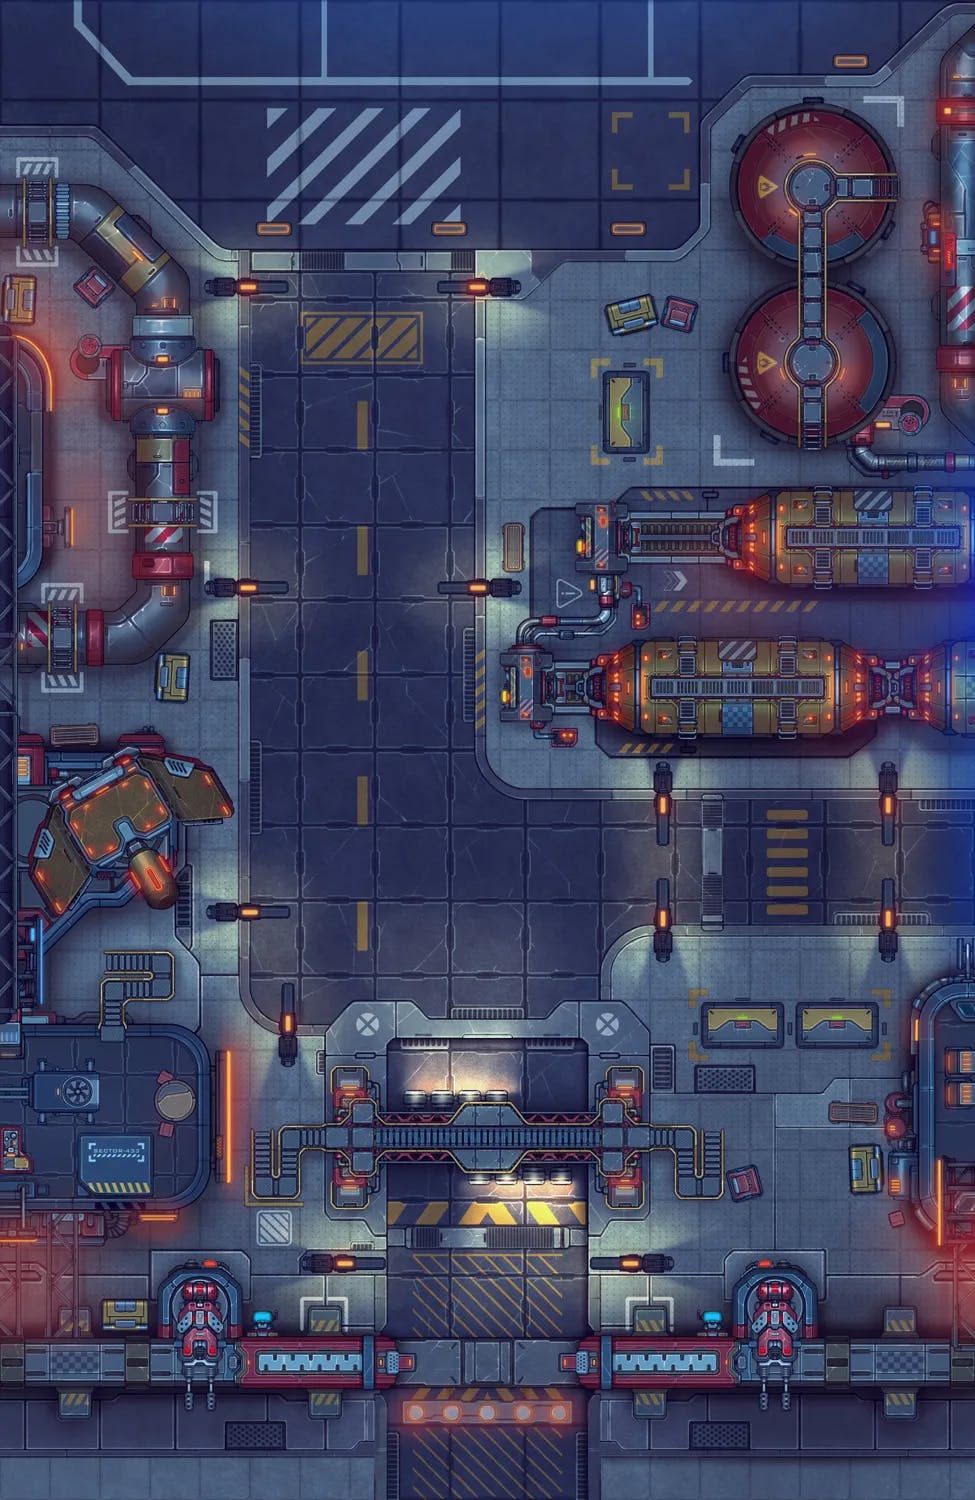 Cyberpunk Airbase map, Original variant